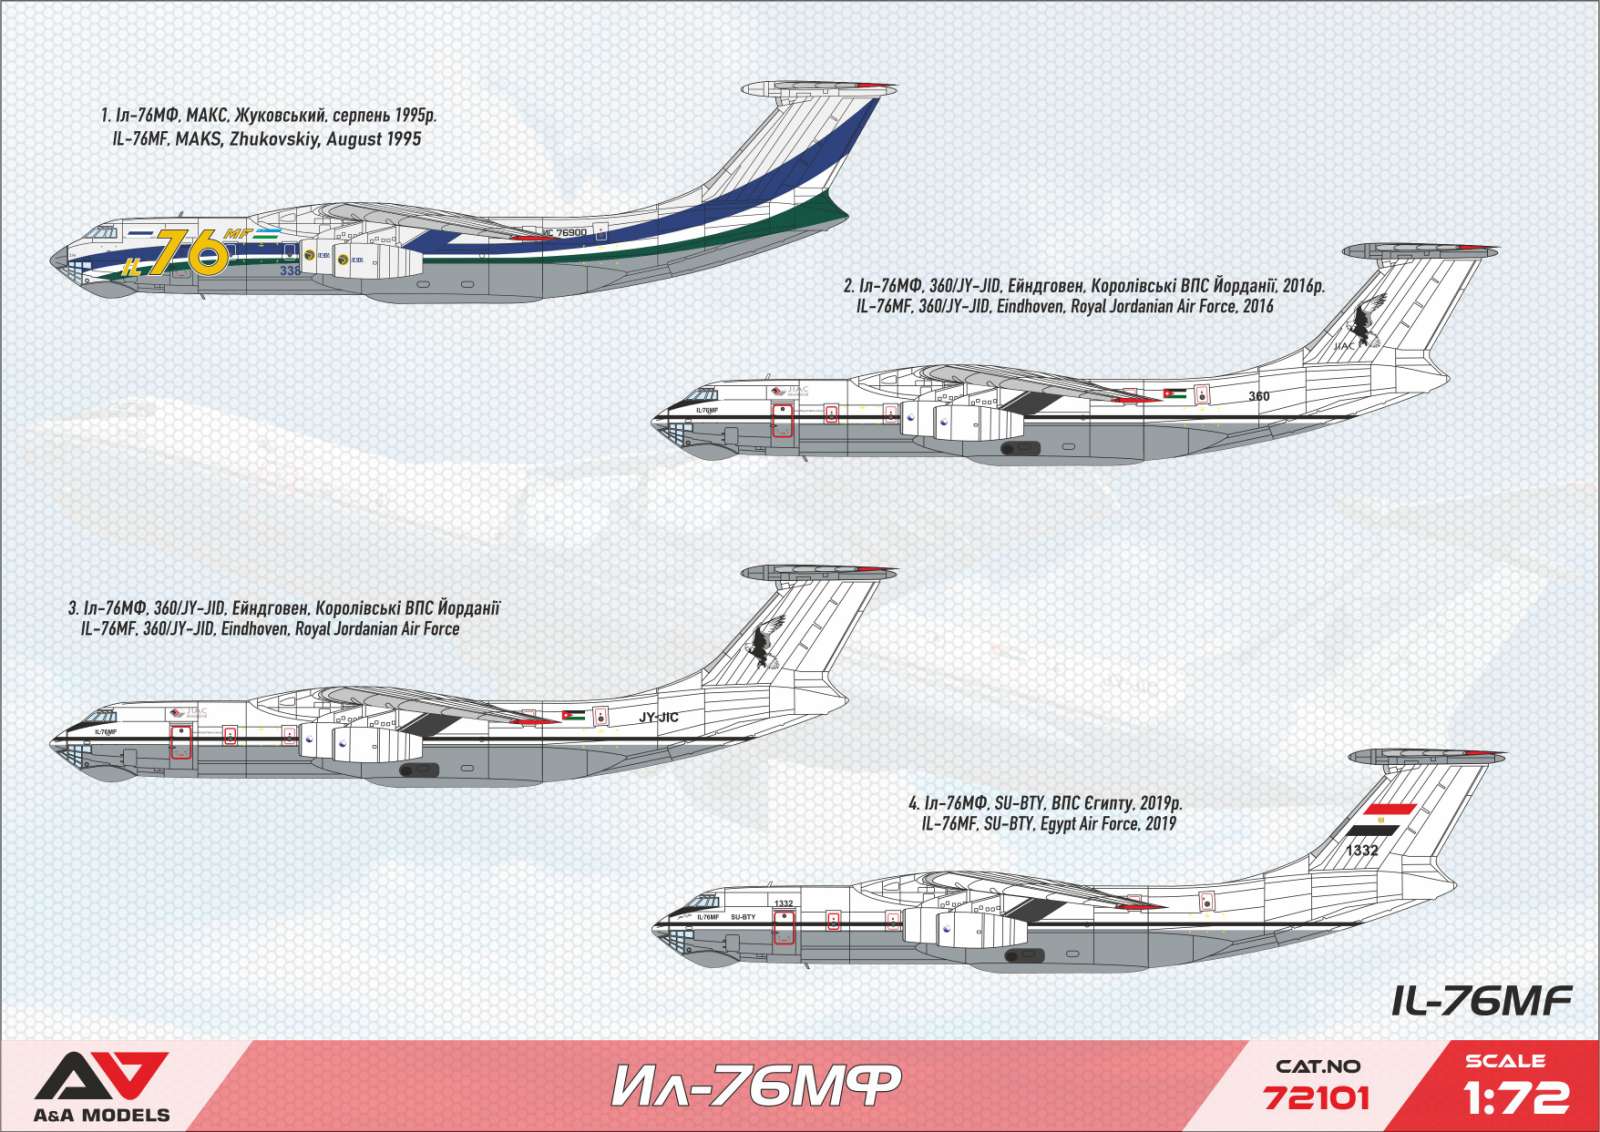 A & A Models 1/72 Ilyushin Il-76MF # 72101